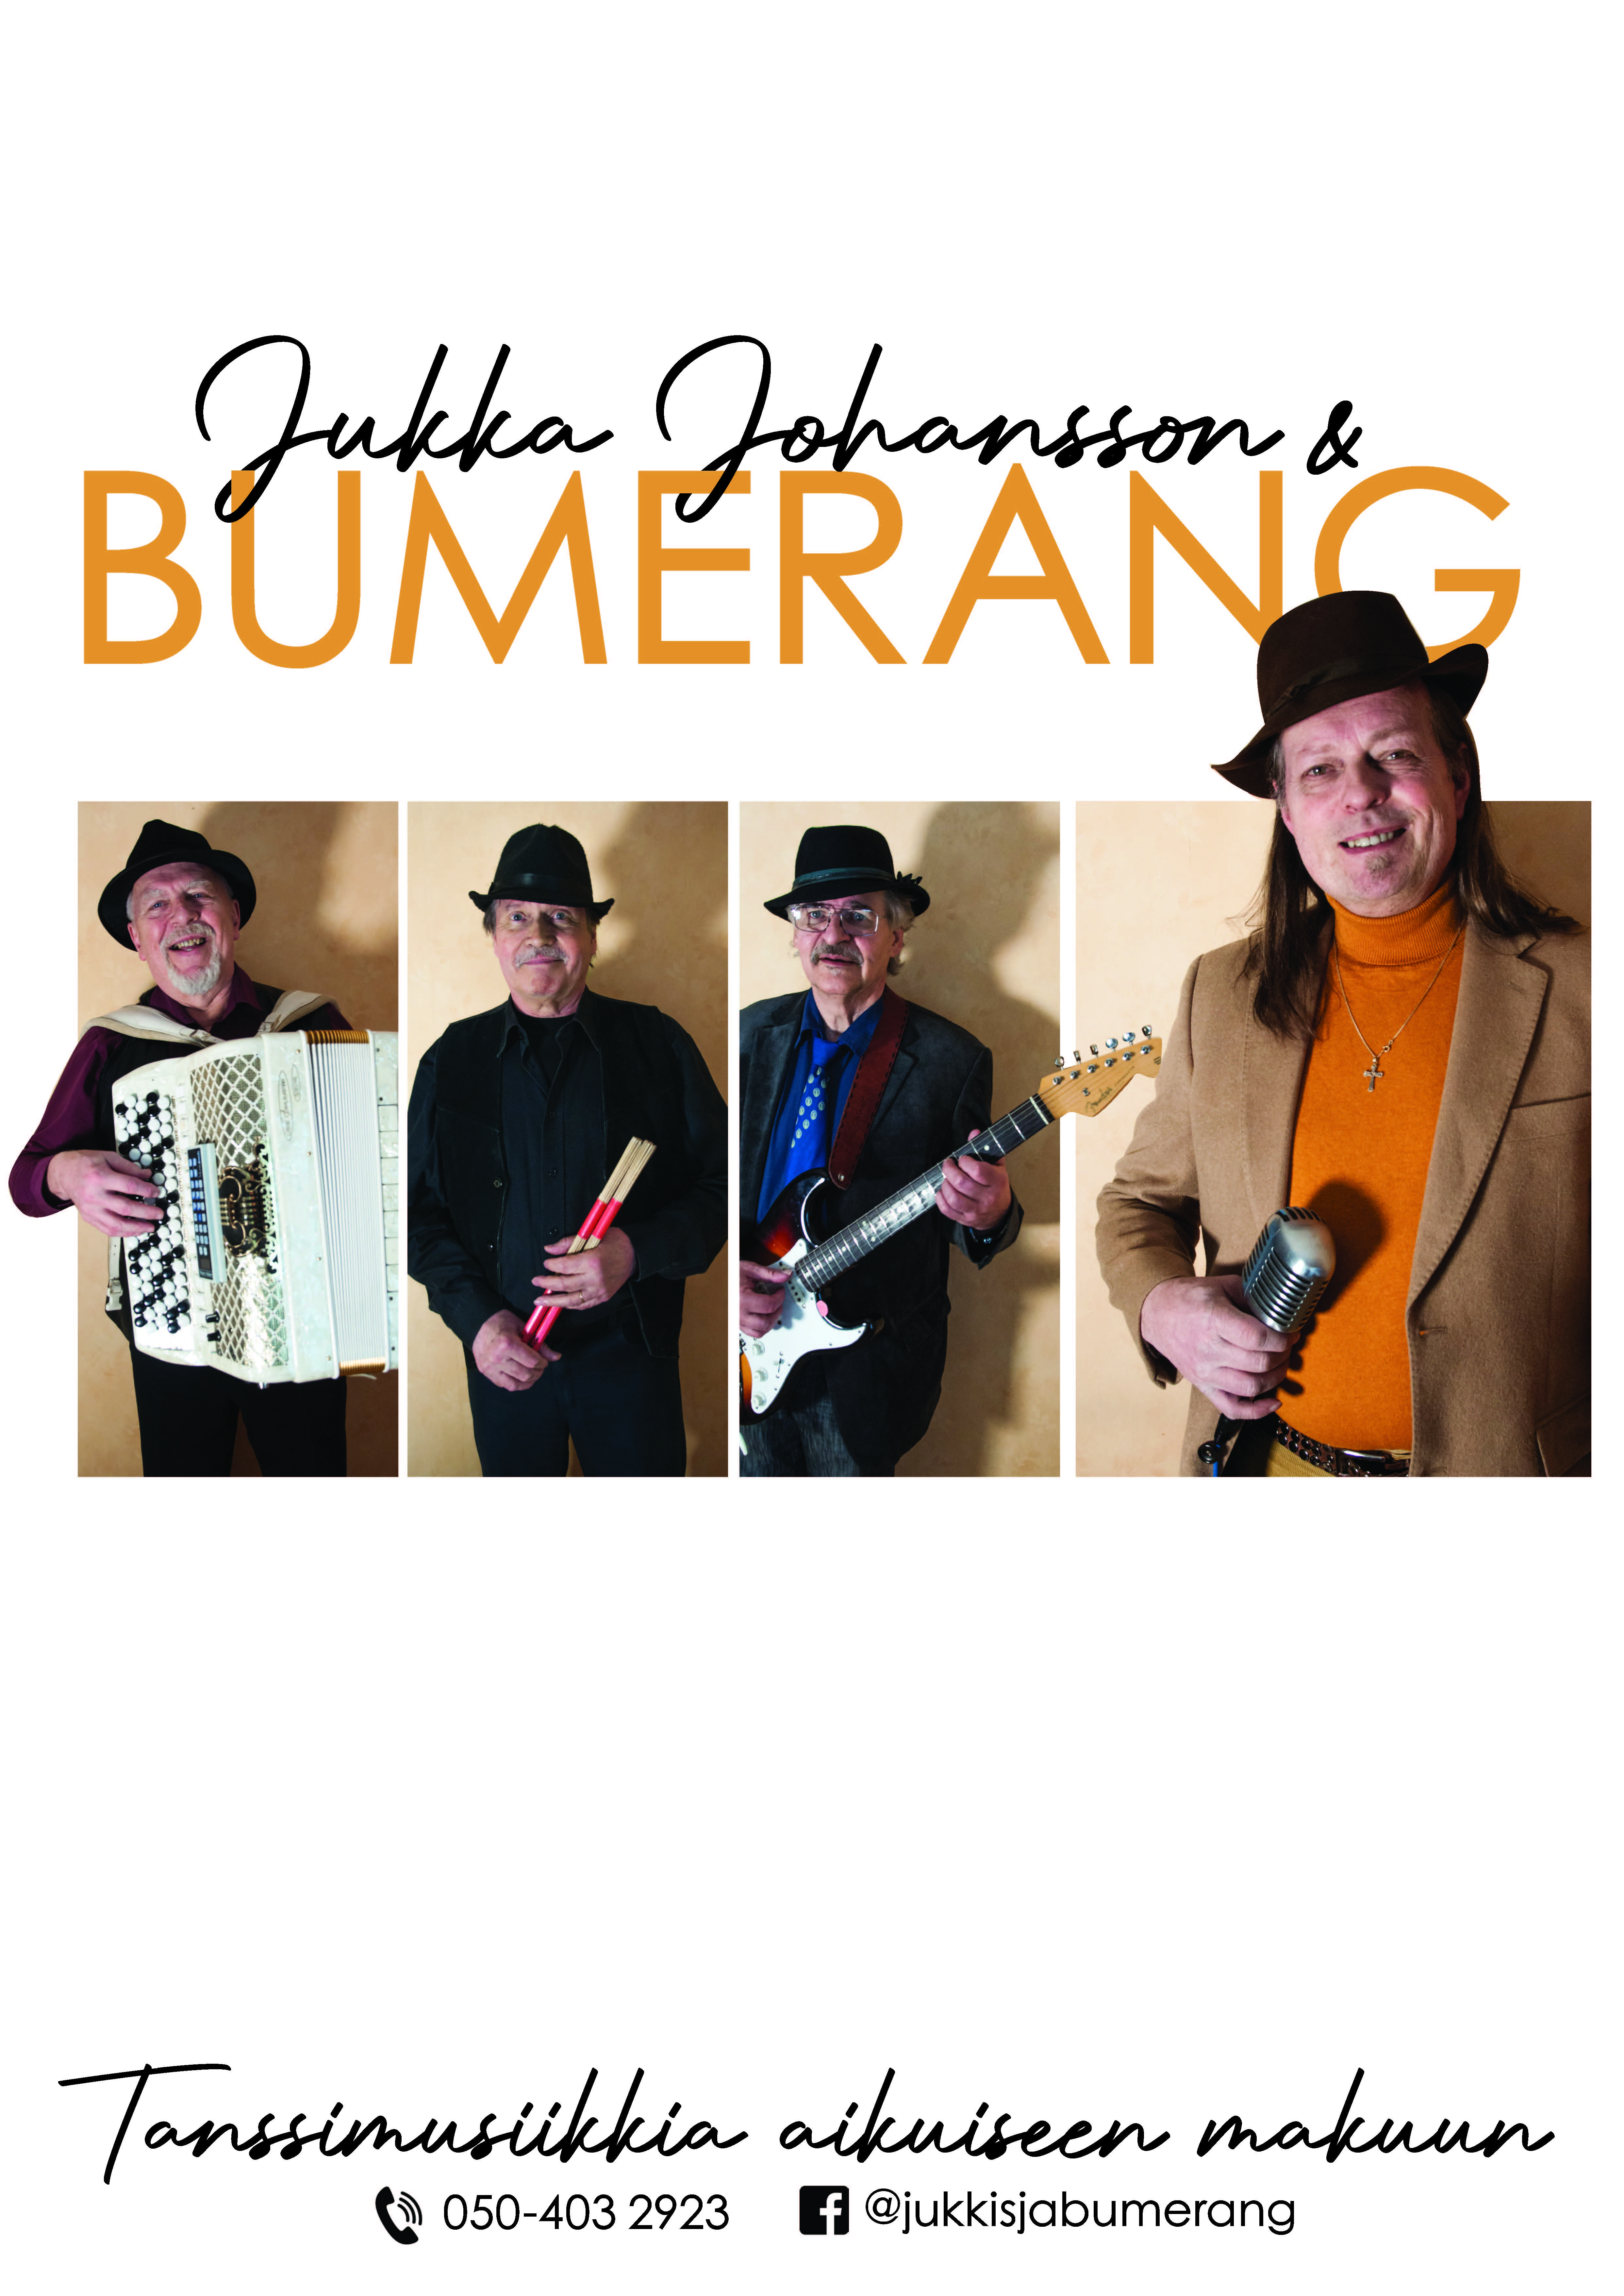 Jukka Johansson & Bumerang